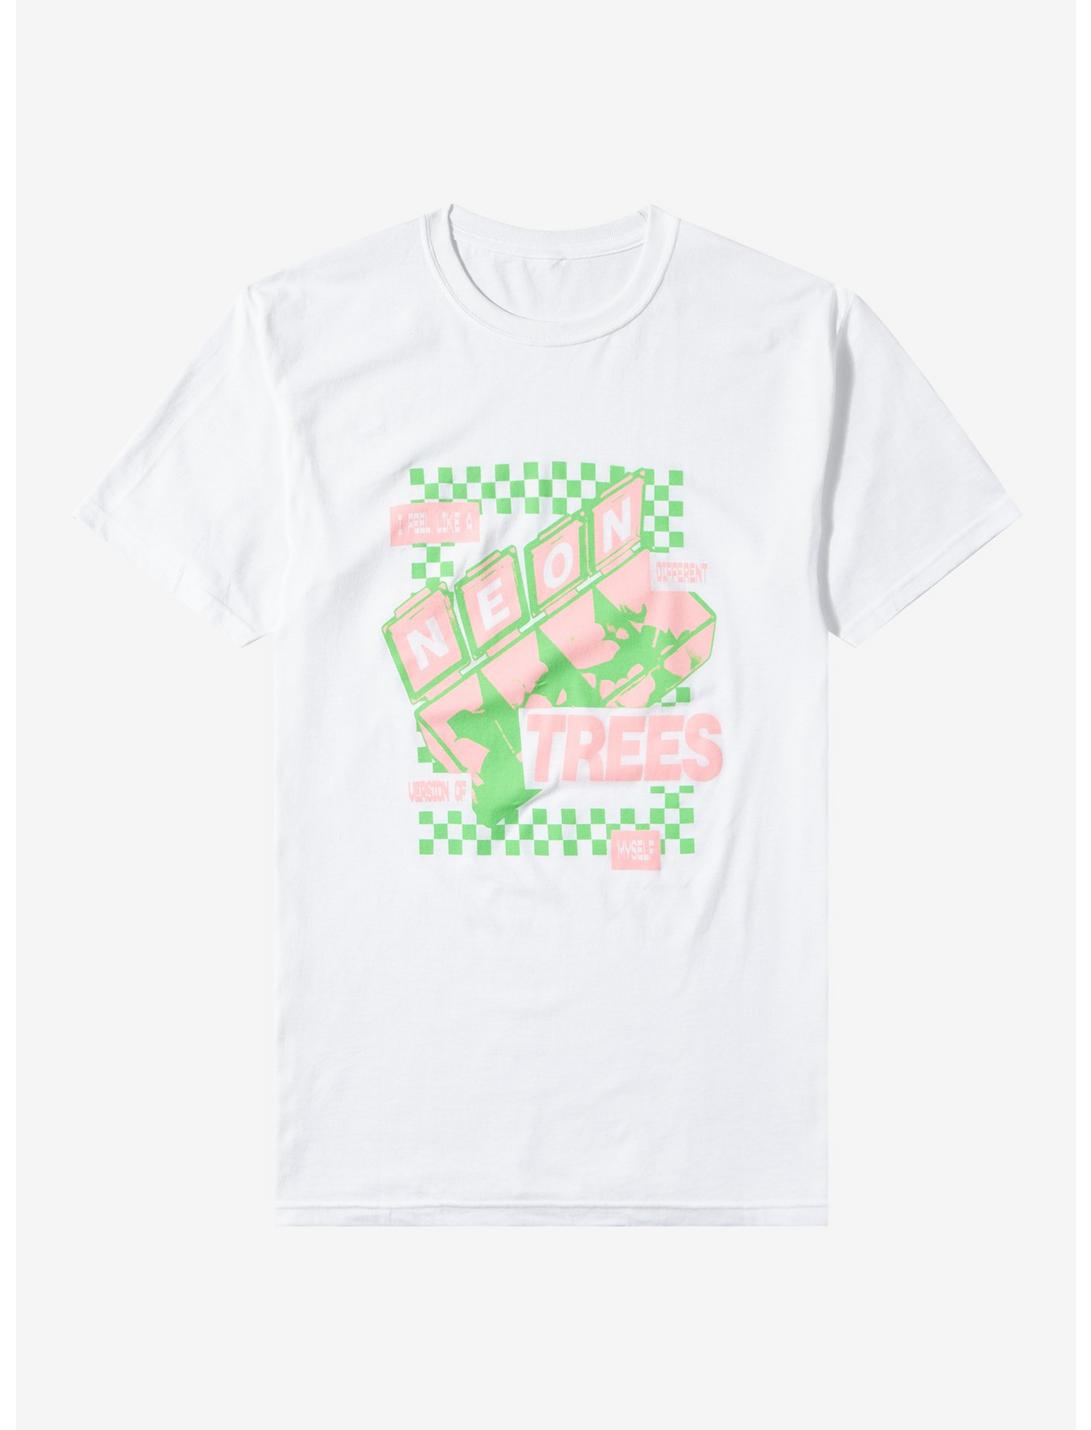 Neon Trees Pill Box Boyfriend Fit Girls T-Shirt, BRIGHT WHITE, hi-res